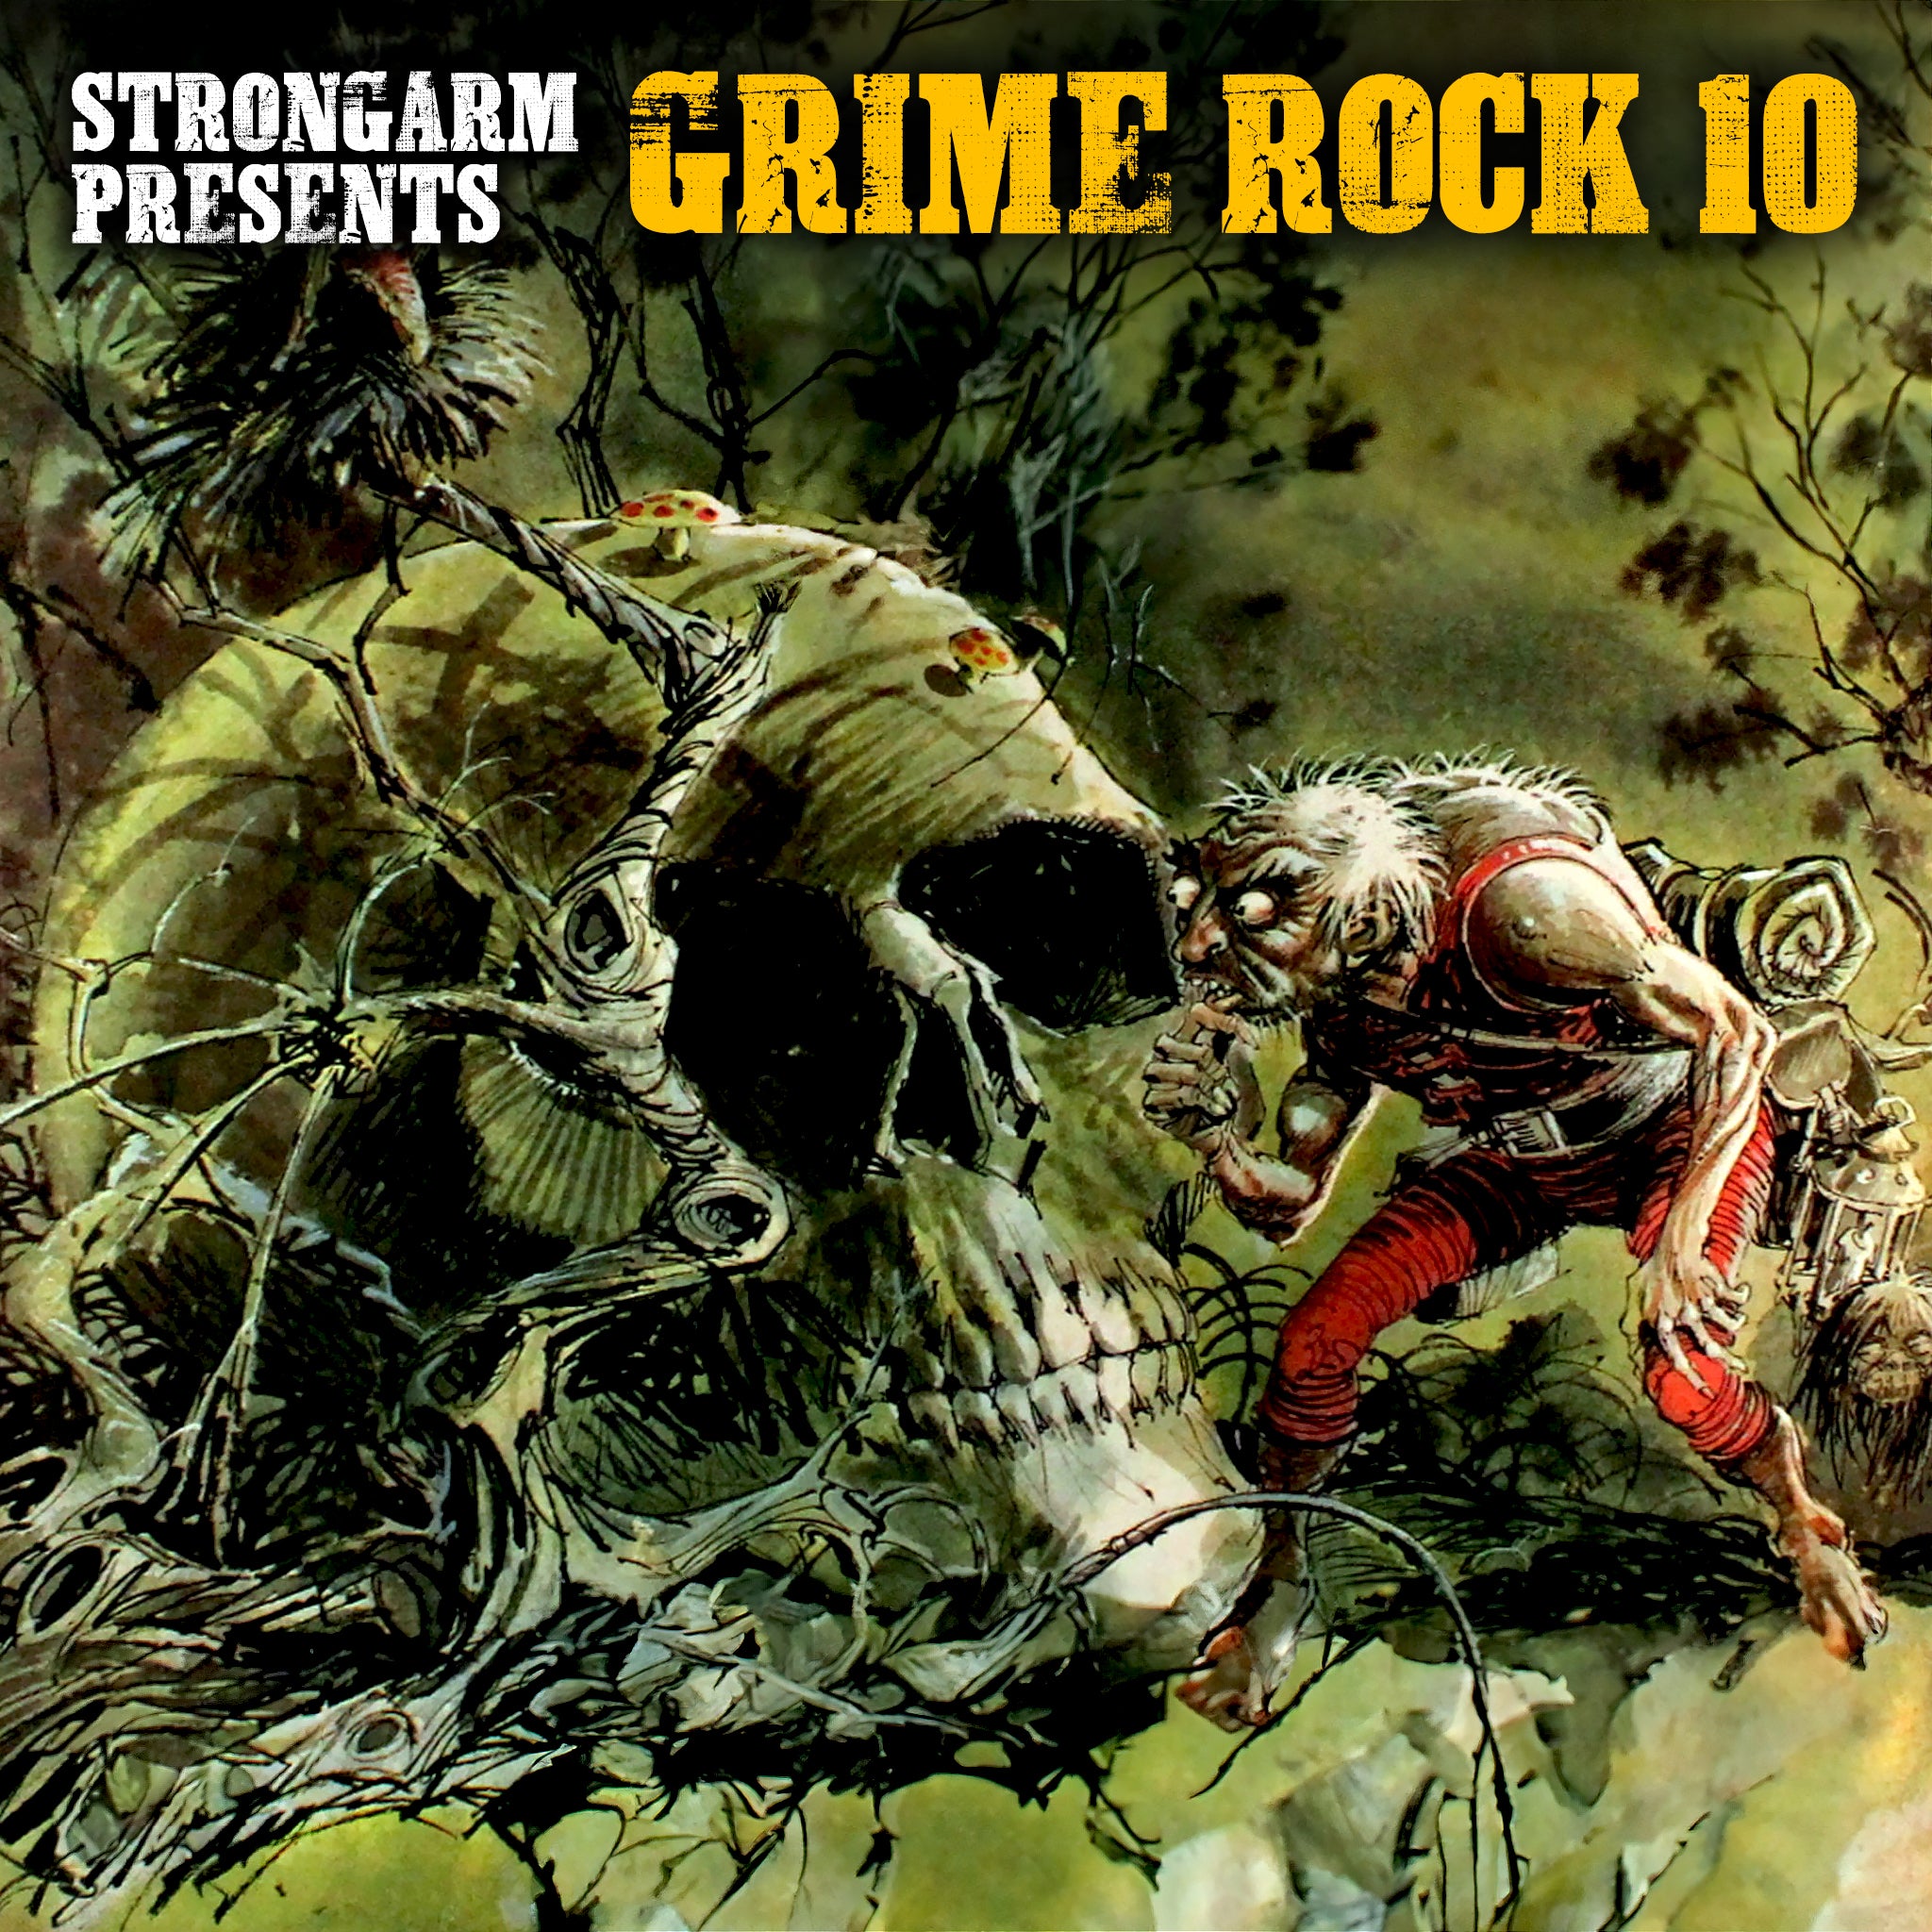 Grime Rock 10